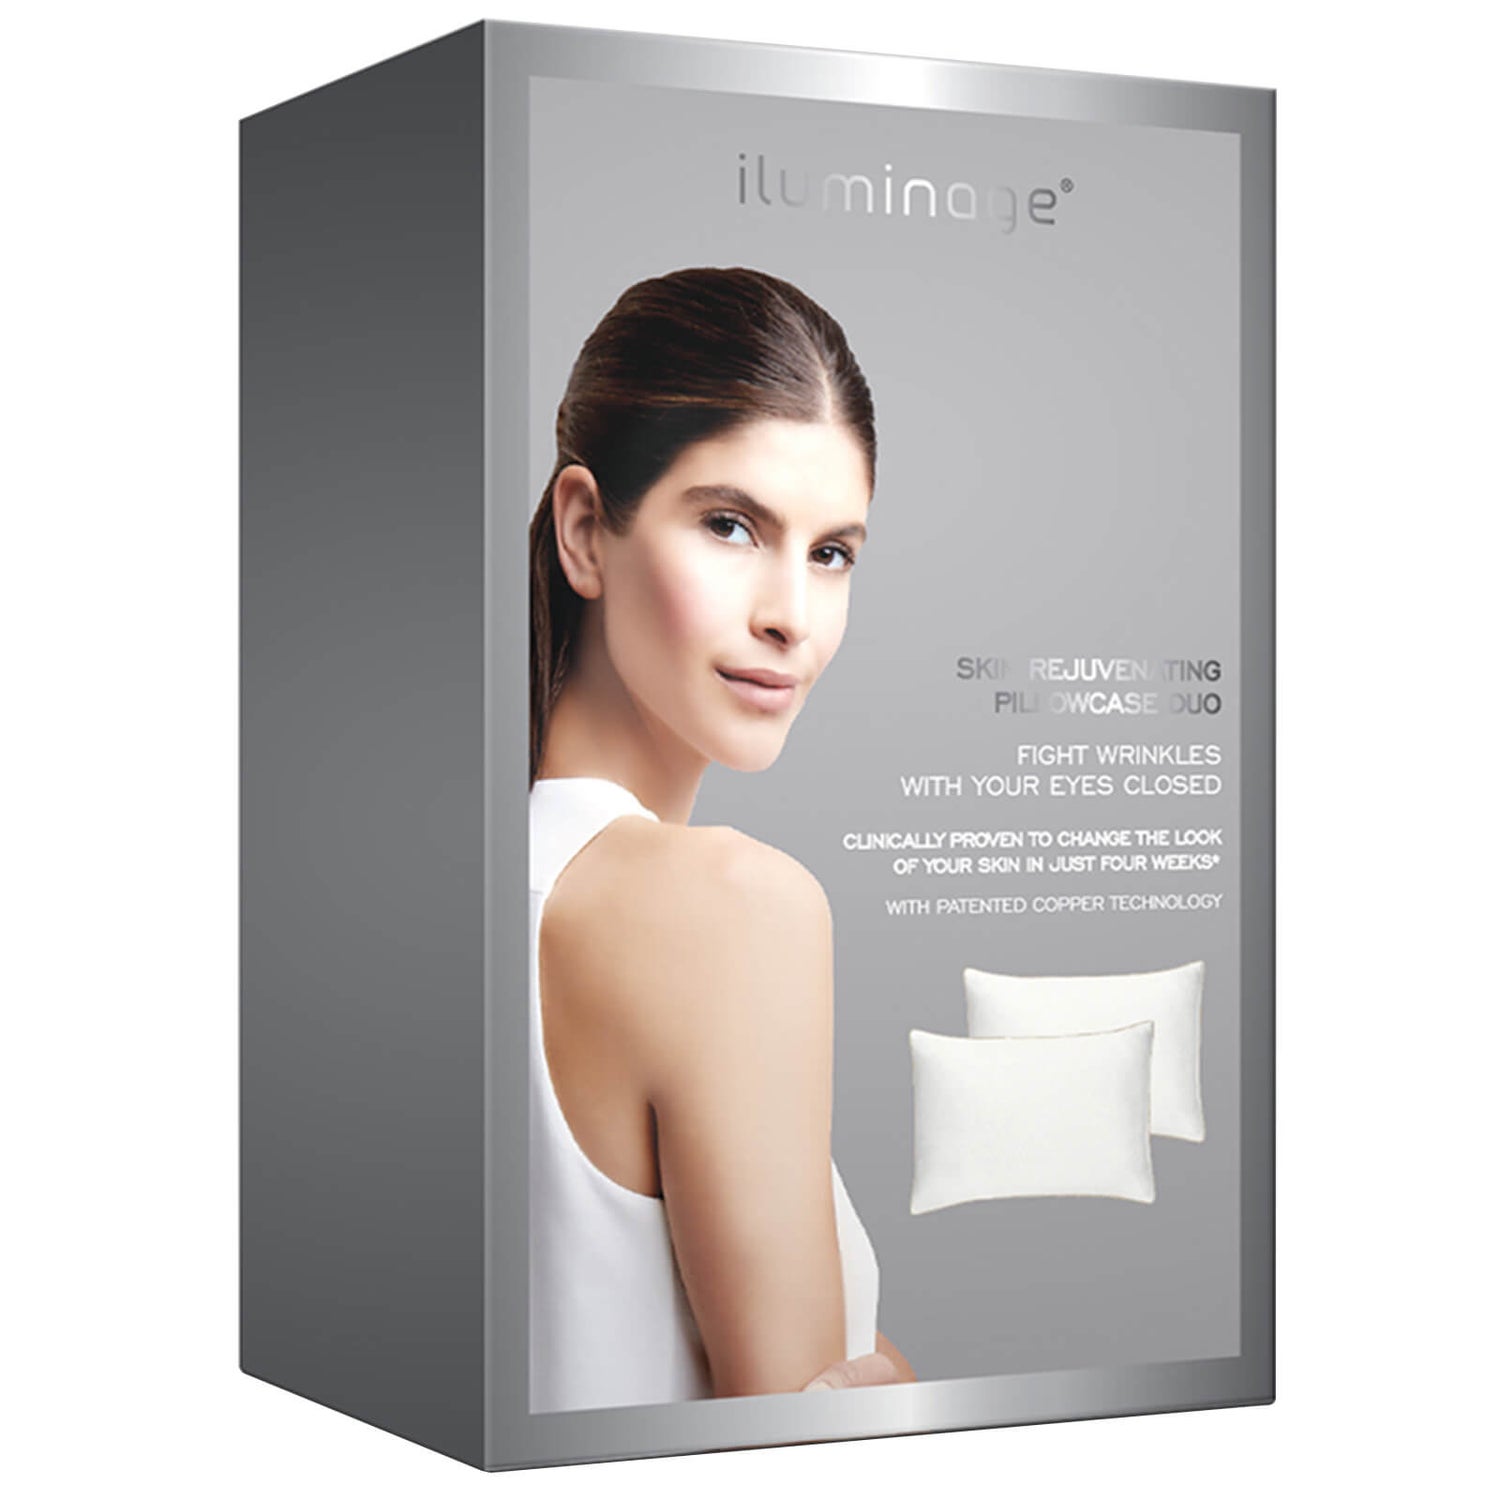 Iluminage Skin Rejuvenating Pillowcase Duo - White